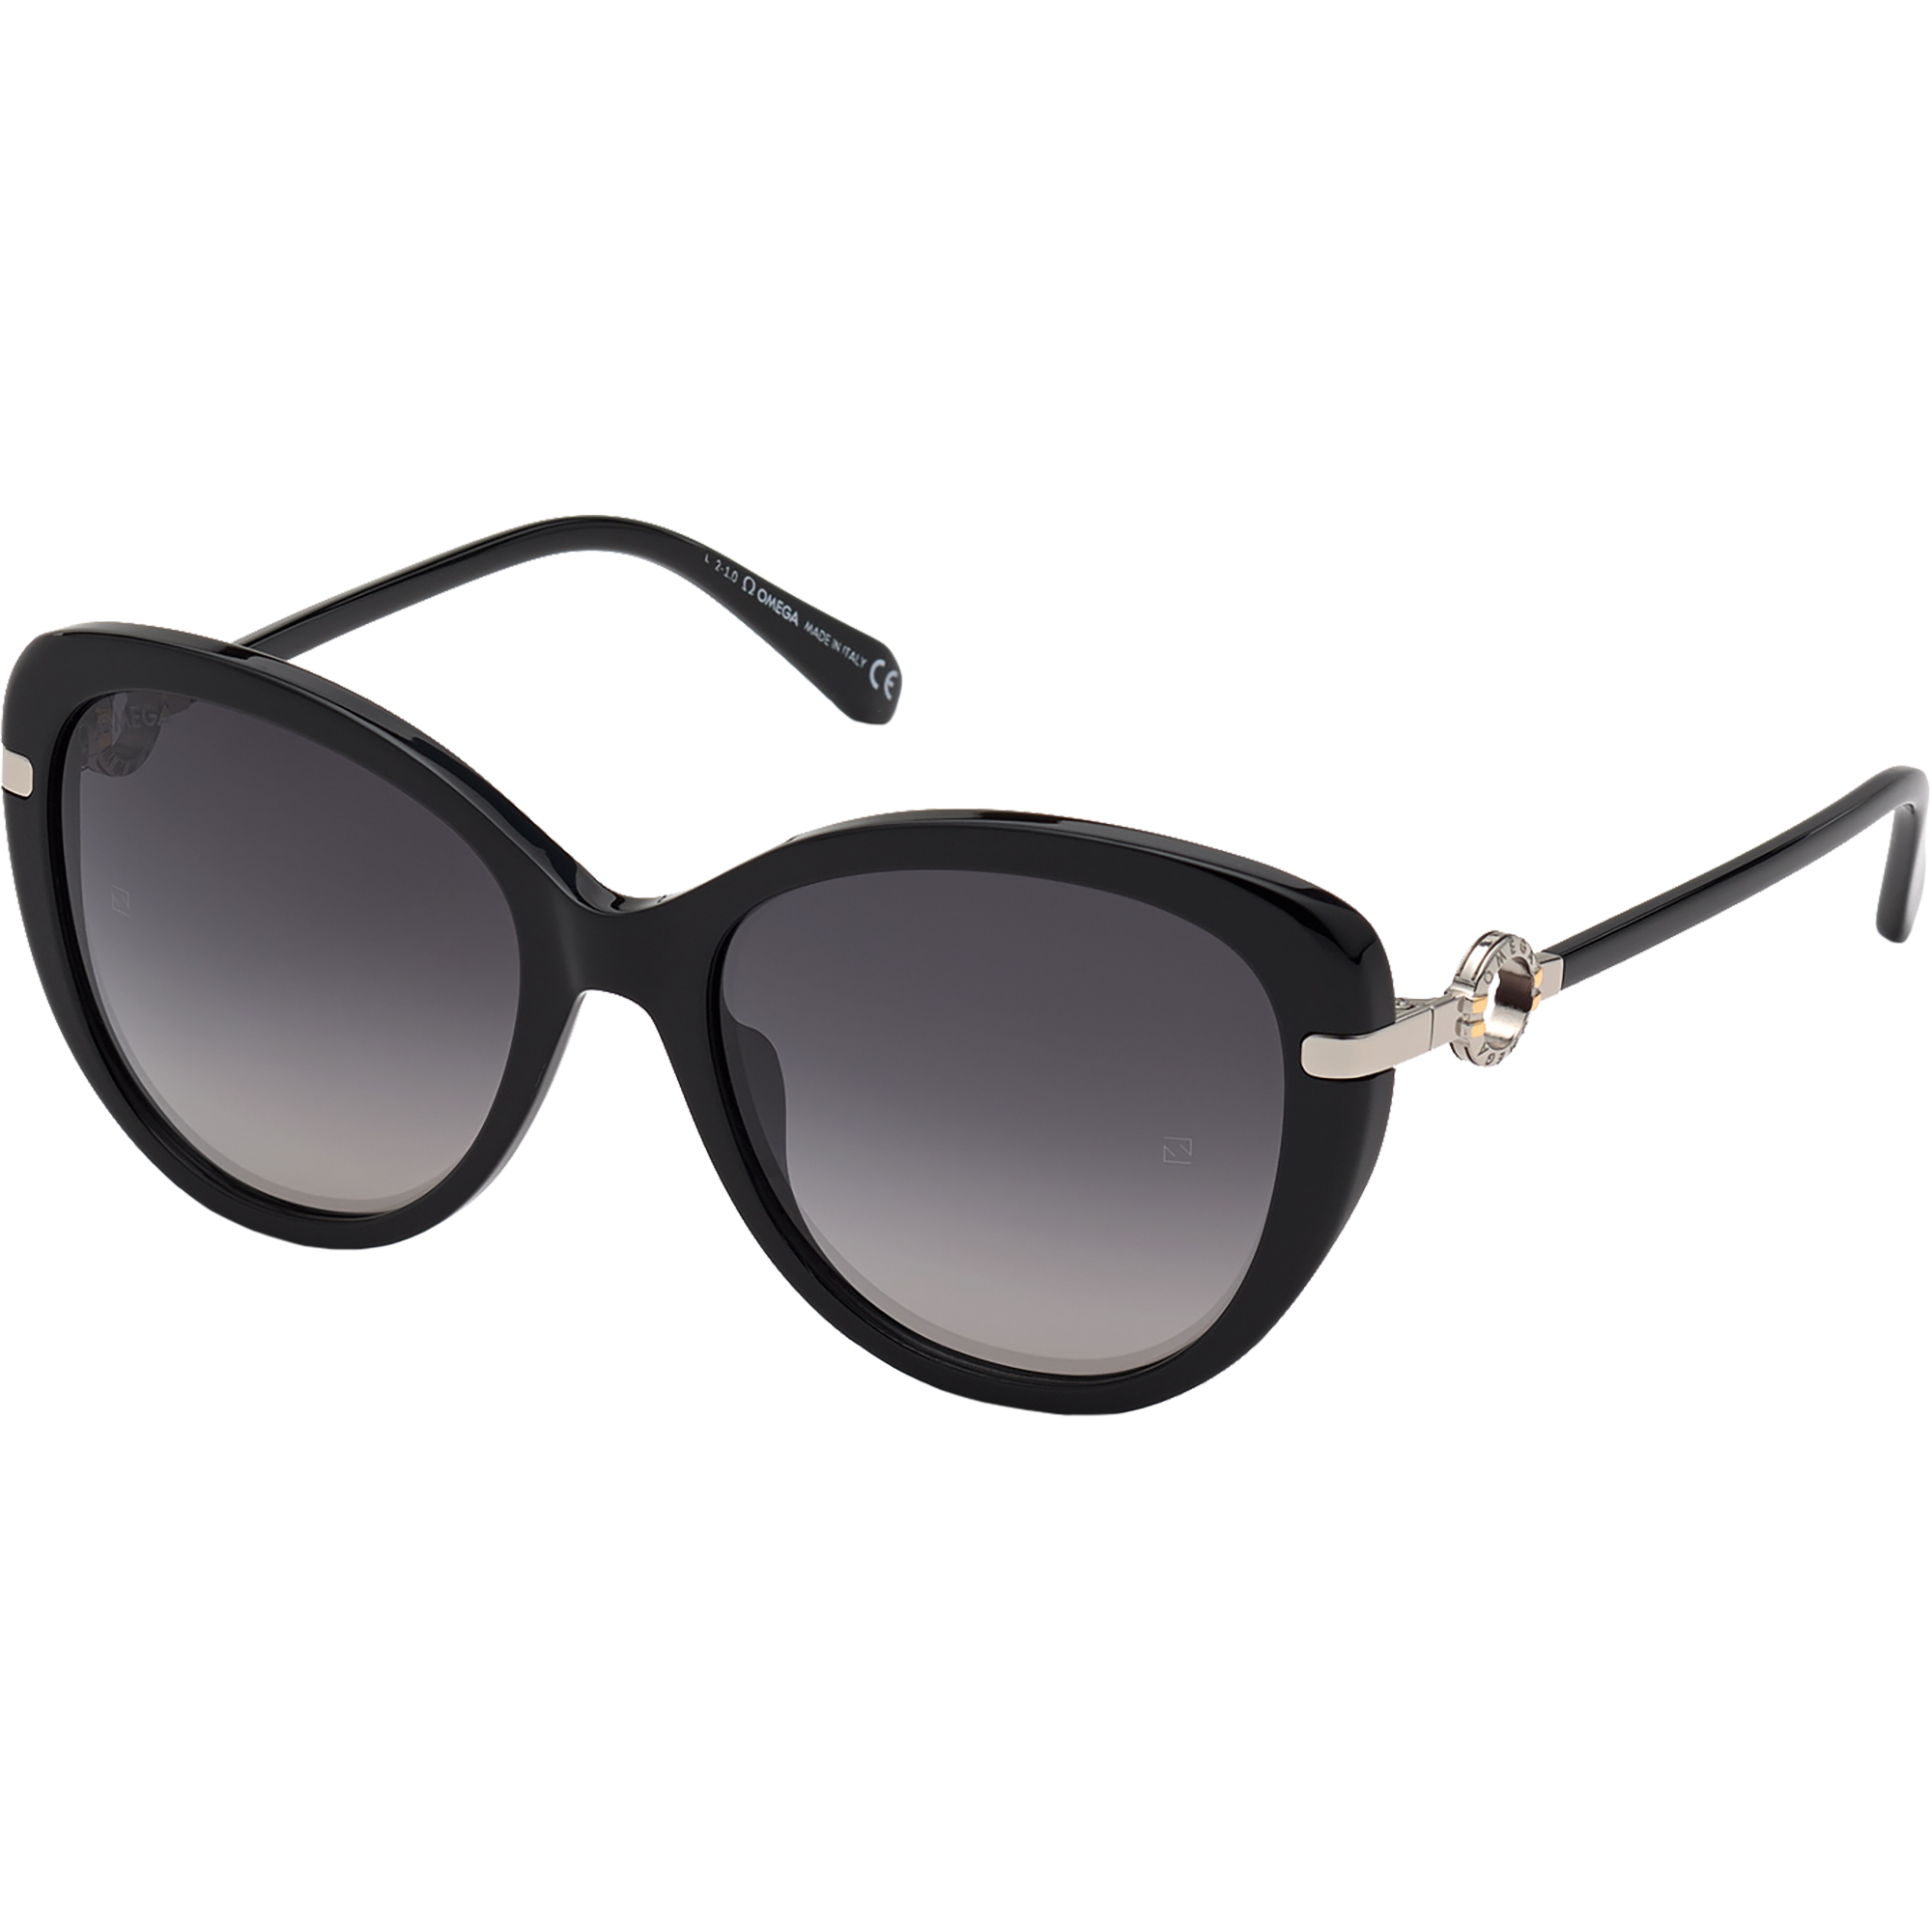 Sunglasses - Cat Eye style, Woman - OM0032-H5601C